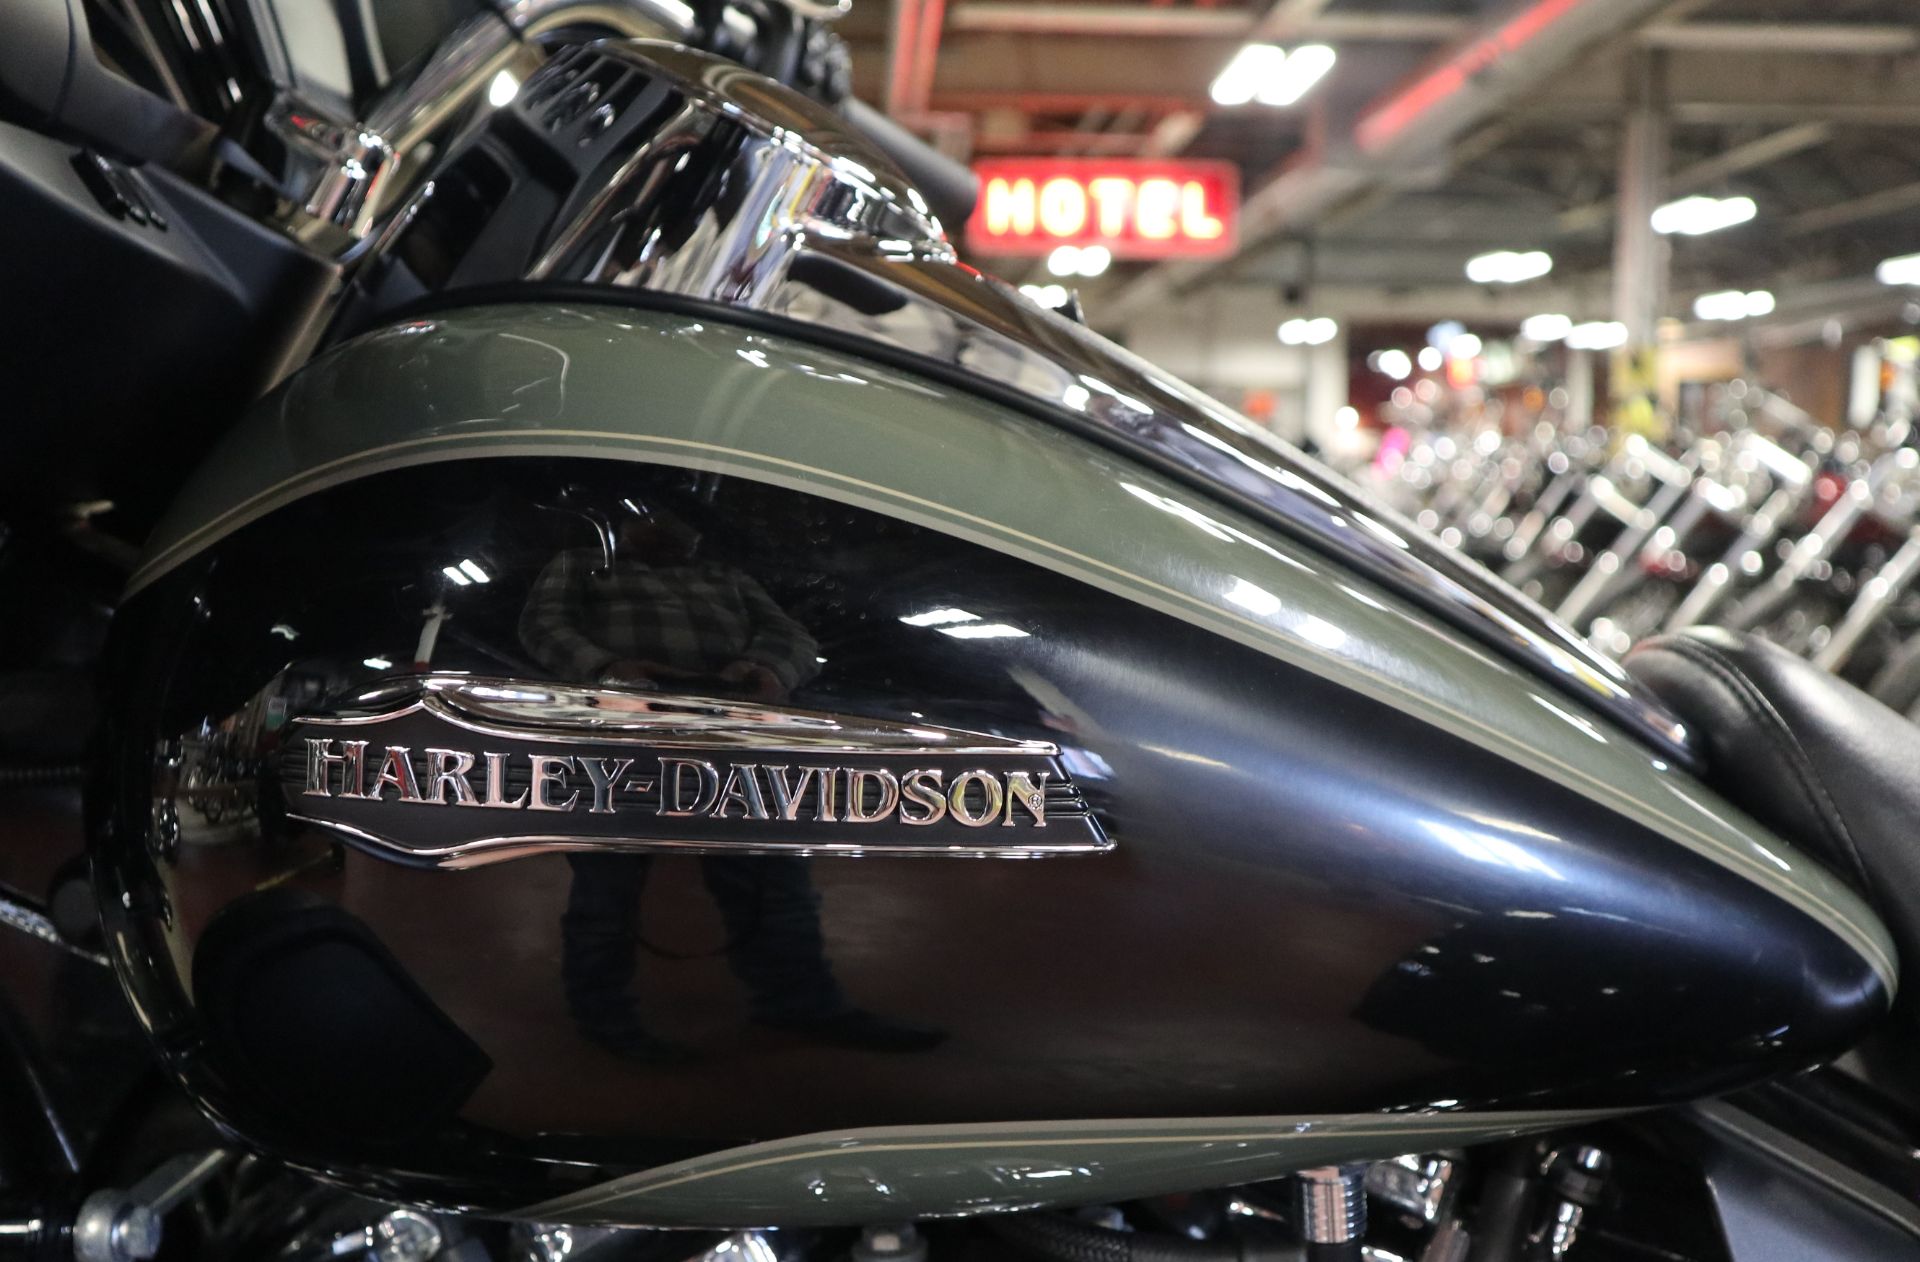 2021 Harley-Davidson Tri Glide® Ultra in New London, Connecticut - Photo 10